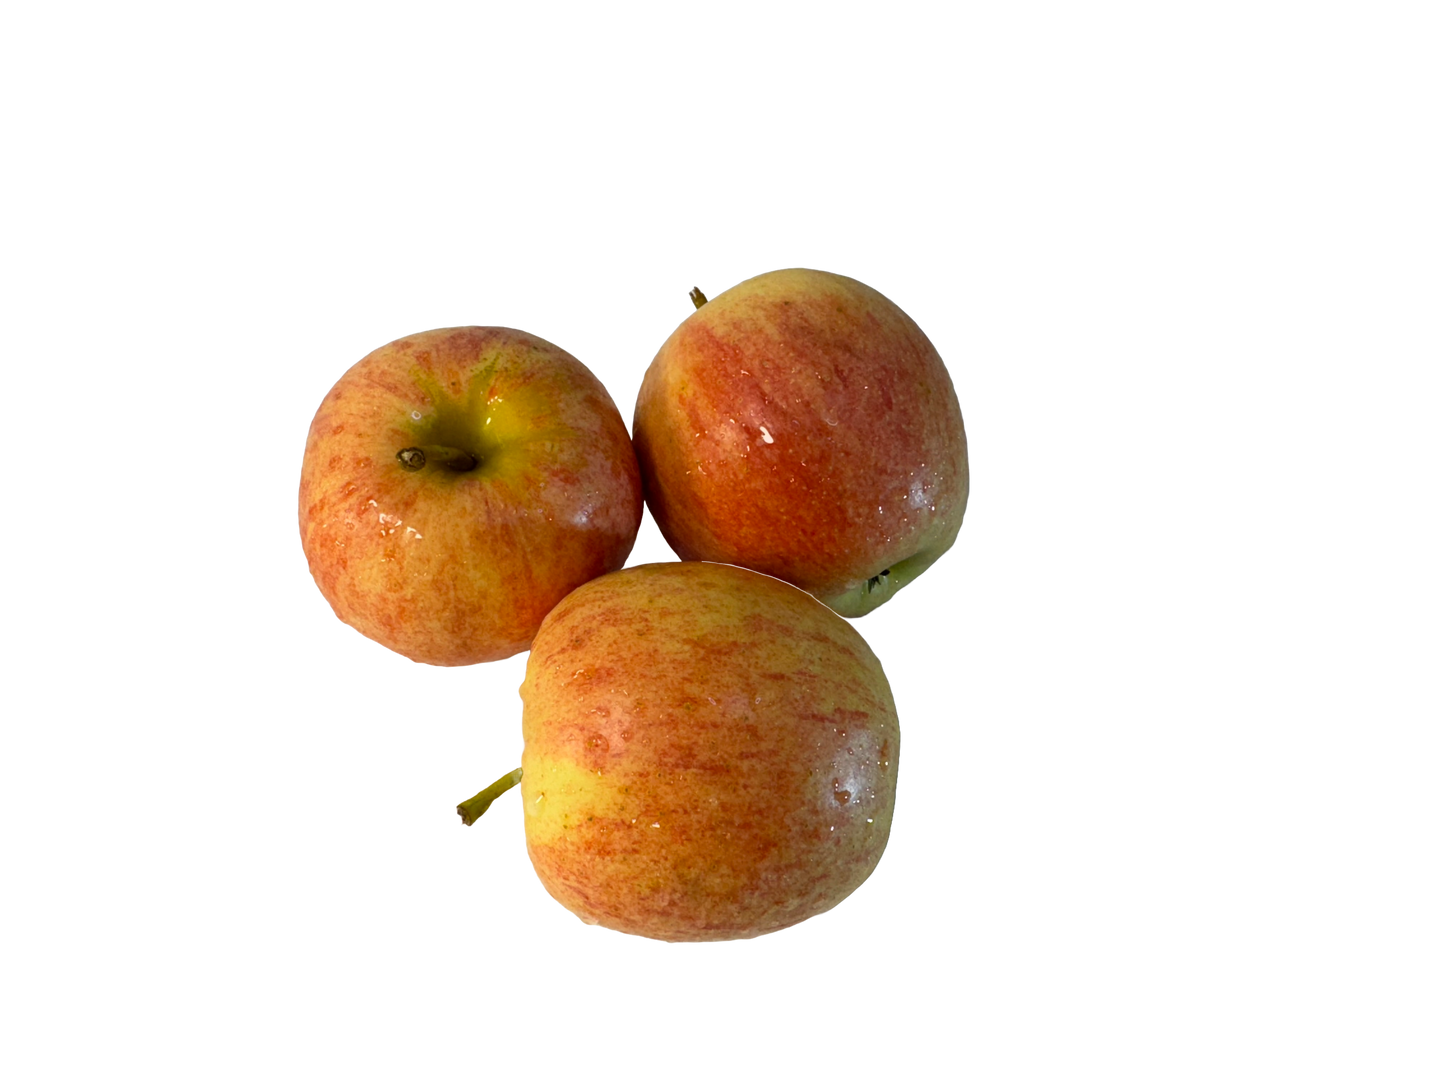 Gala Apples, 3 lb